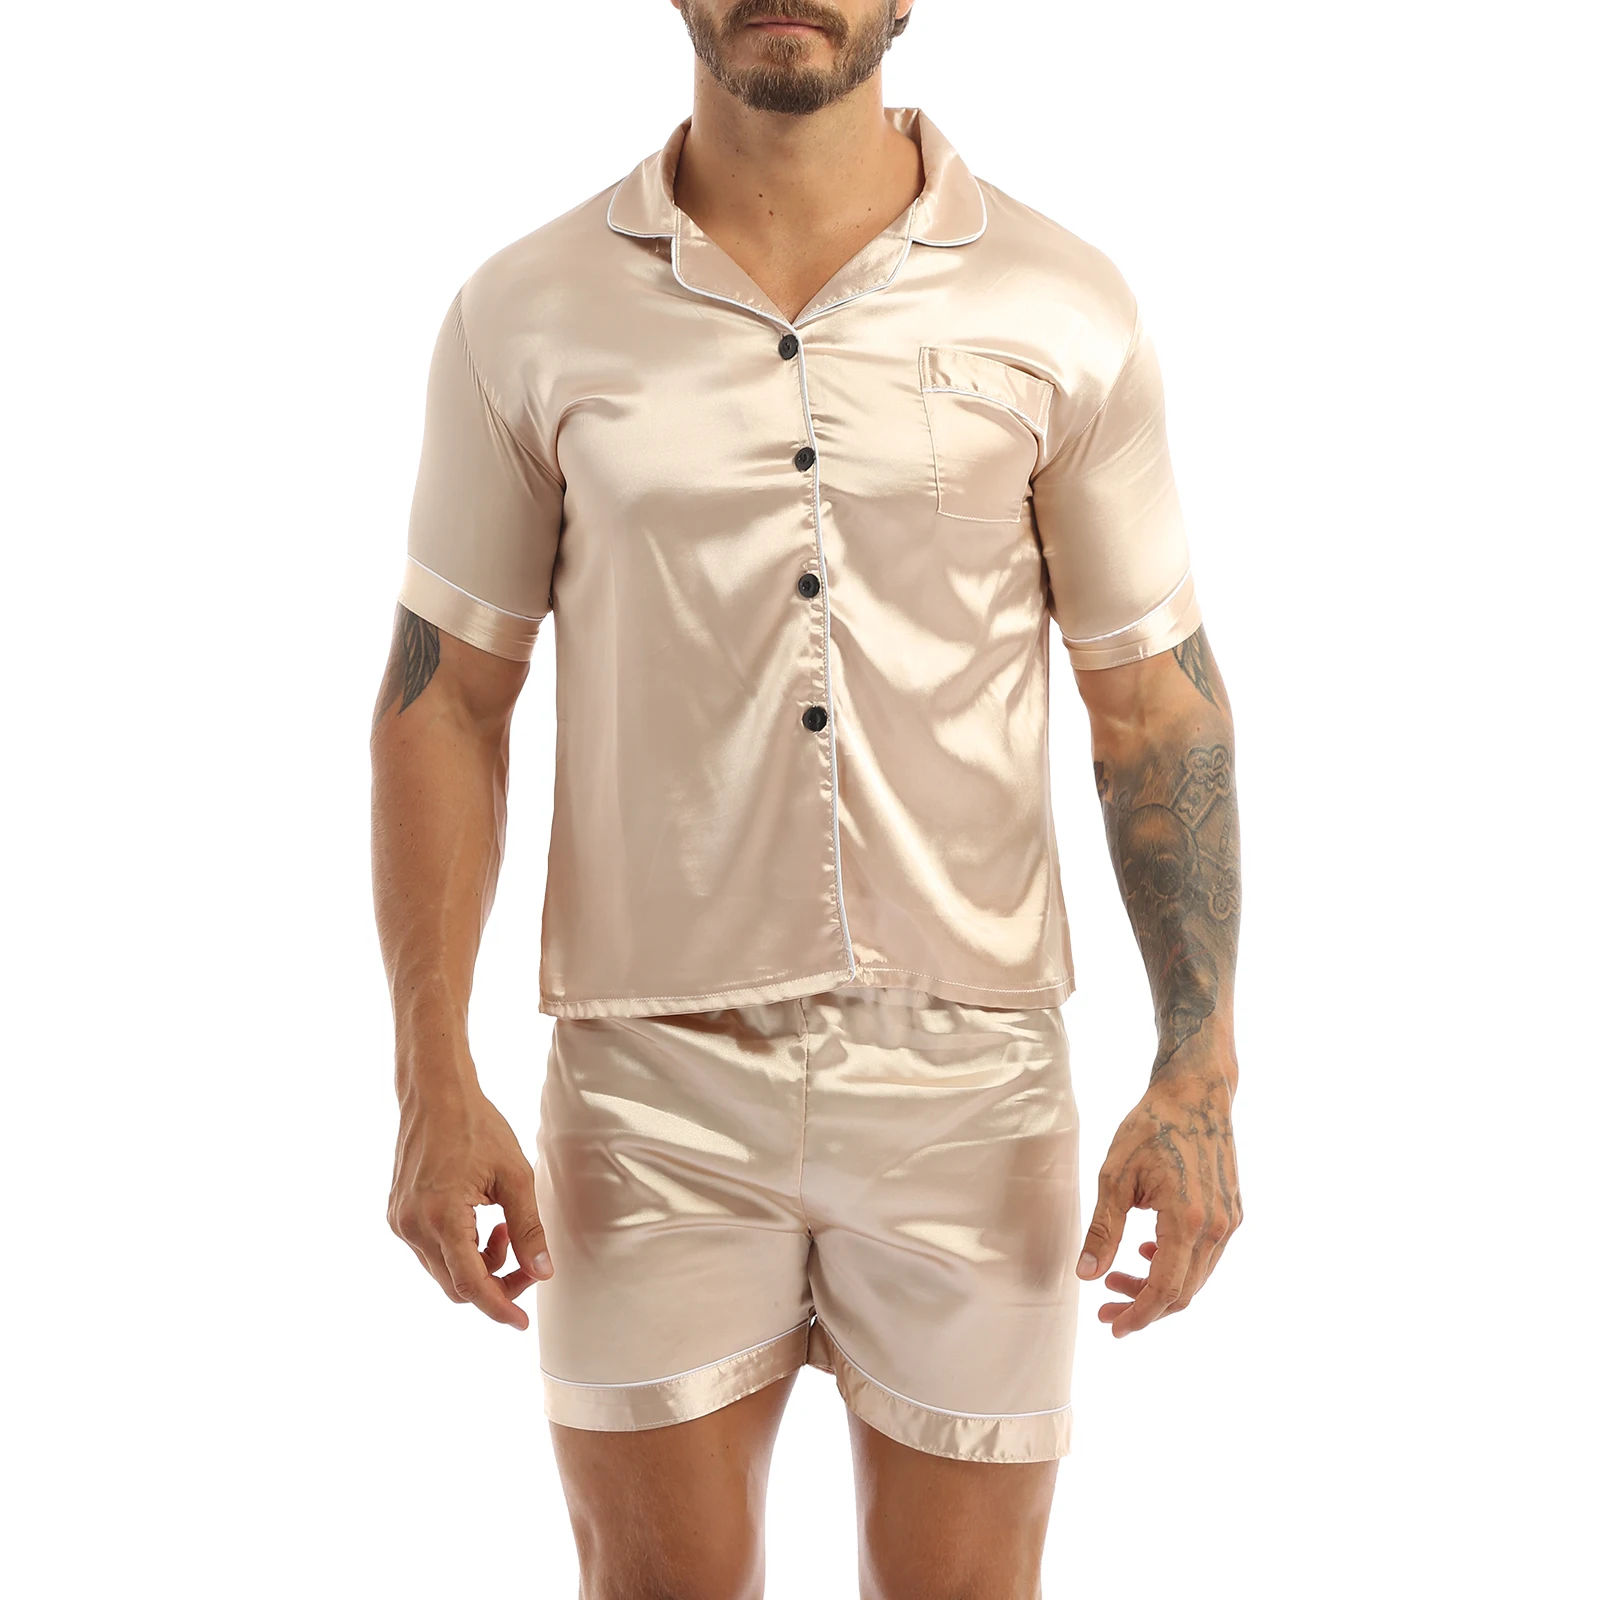 Mens Silky Satin Pajamas Set Lounge Sleepwear Nightwear Notch Collar Button Down Shirt Top with Elastic Waist Boxer Shorts mens pjs sale